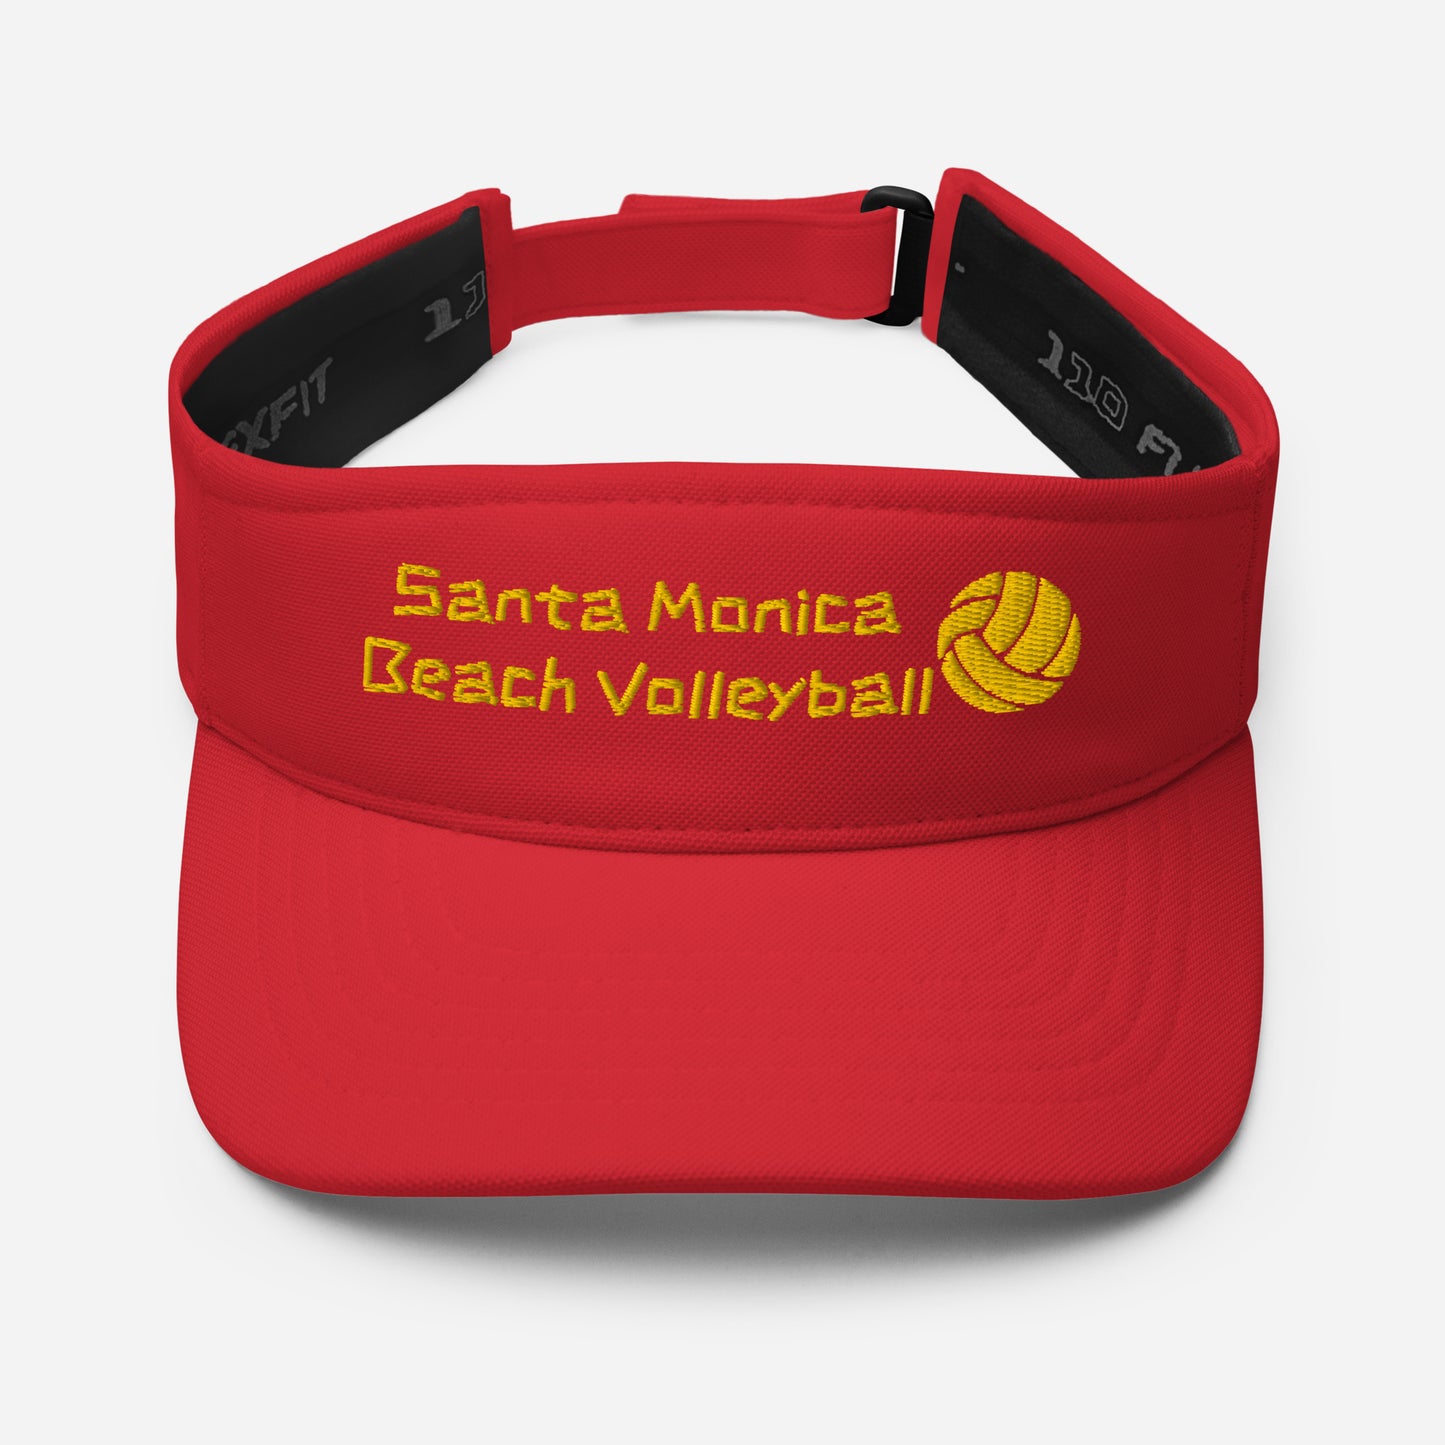 Santa Monica Beach Volleyball - California - Visor